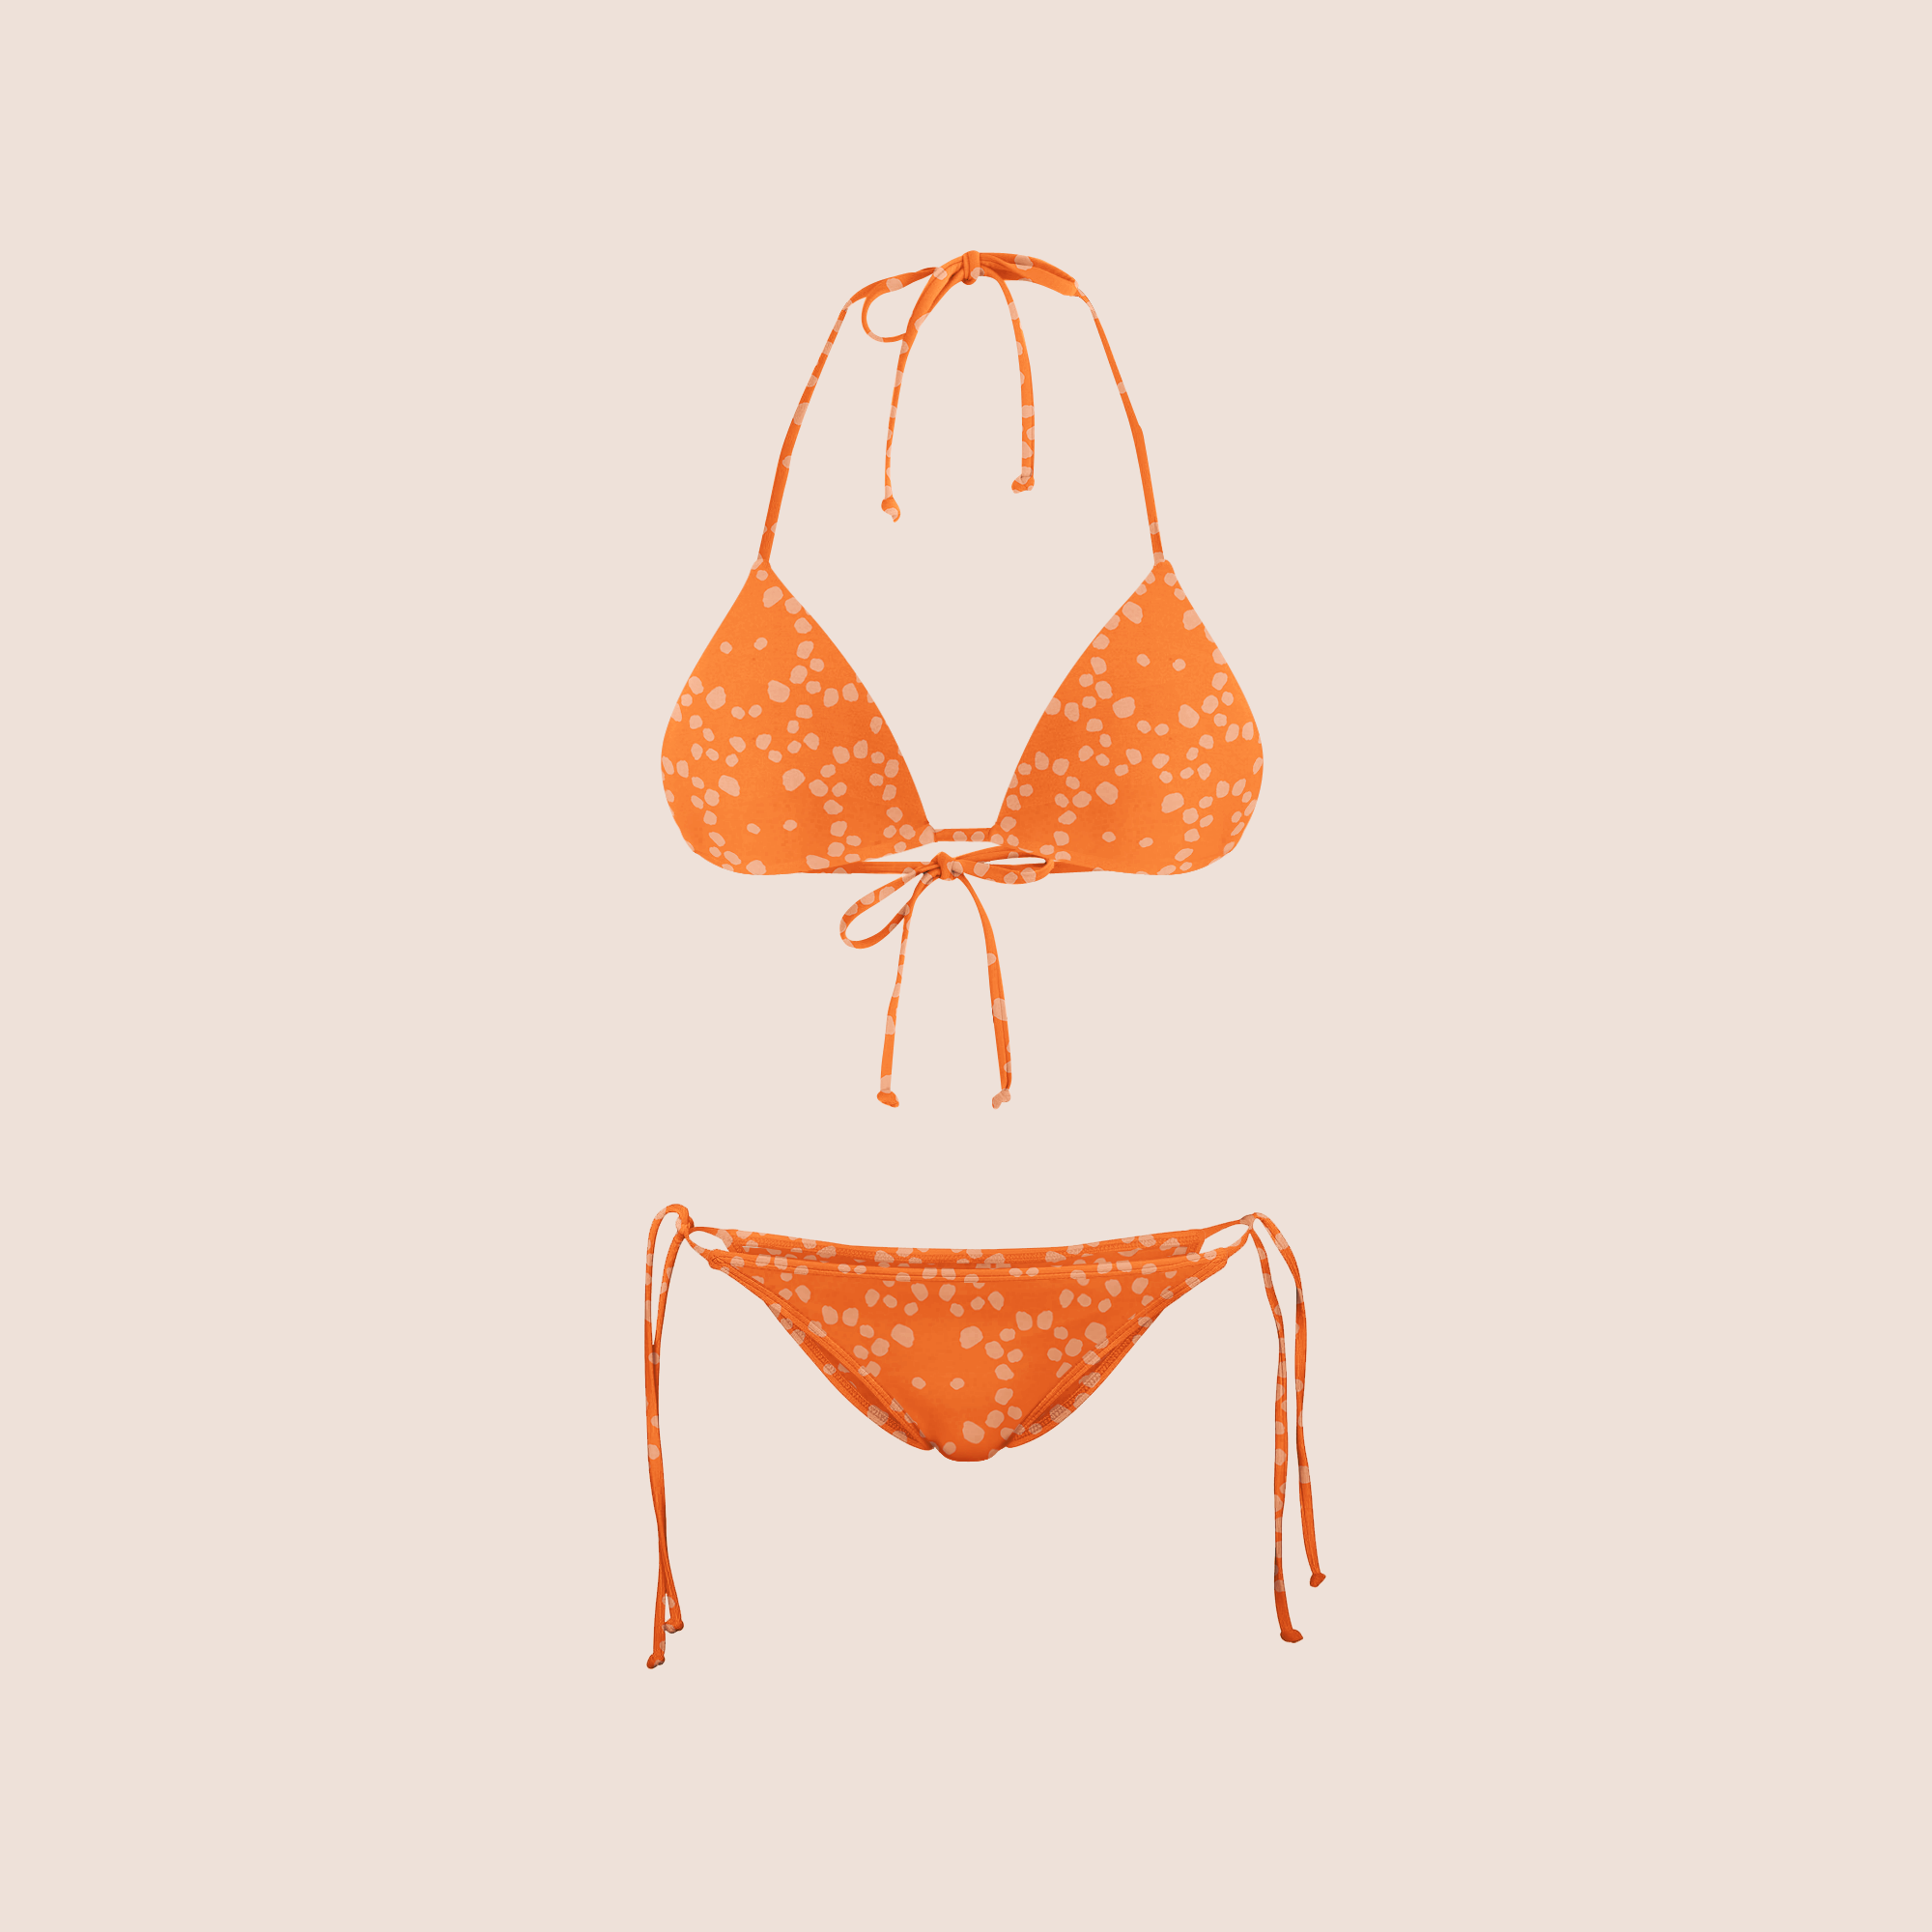 Animal skin digital in orange on orange pattern design printed on recycled fabric bikini mockup